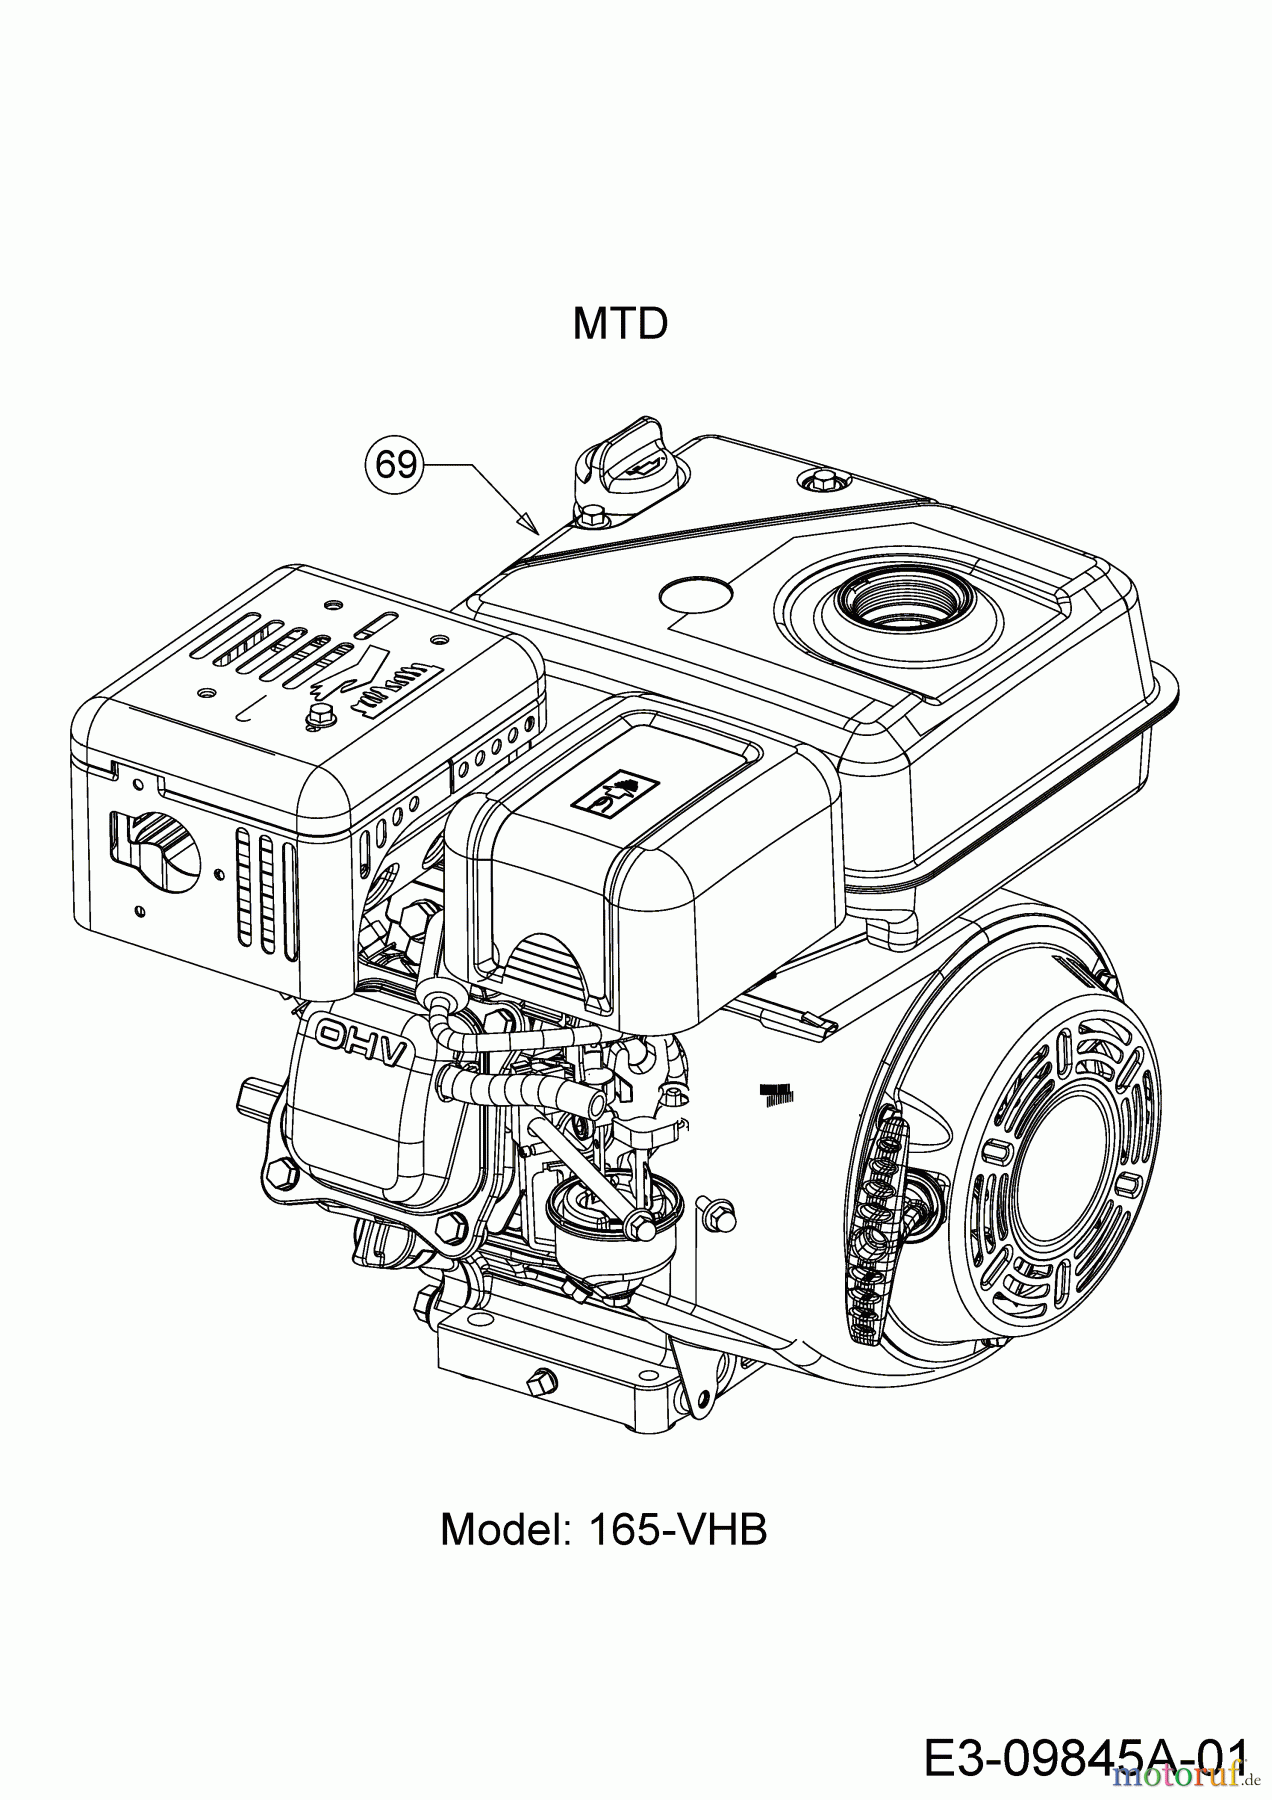  MTD Tillers T/330 M 21D-33MV678  (2017) Engine MTD